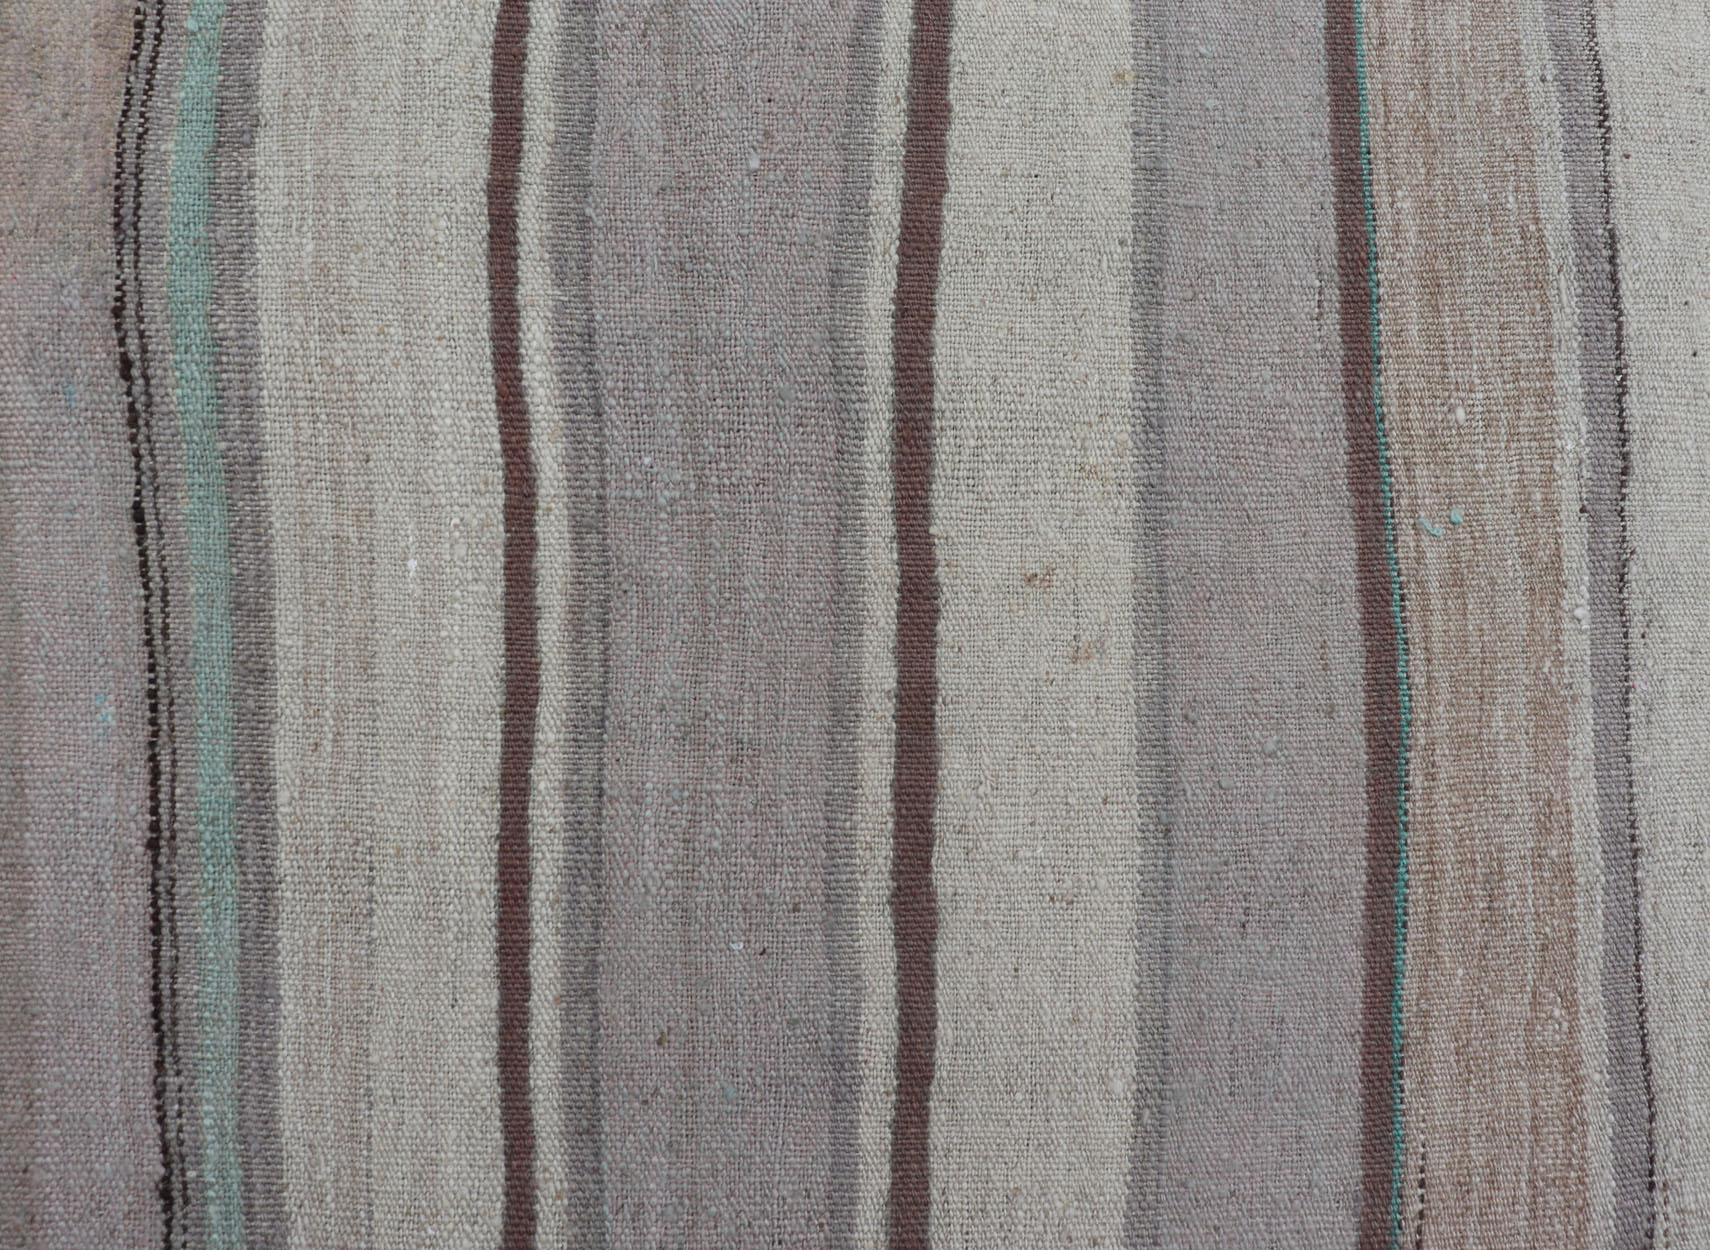 Square Turkish Vintage Flat-Weave in Brown, Lavender, and Cream Stripe Design For Sale 2